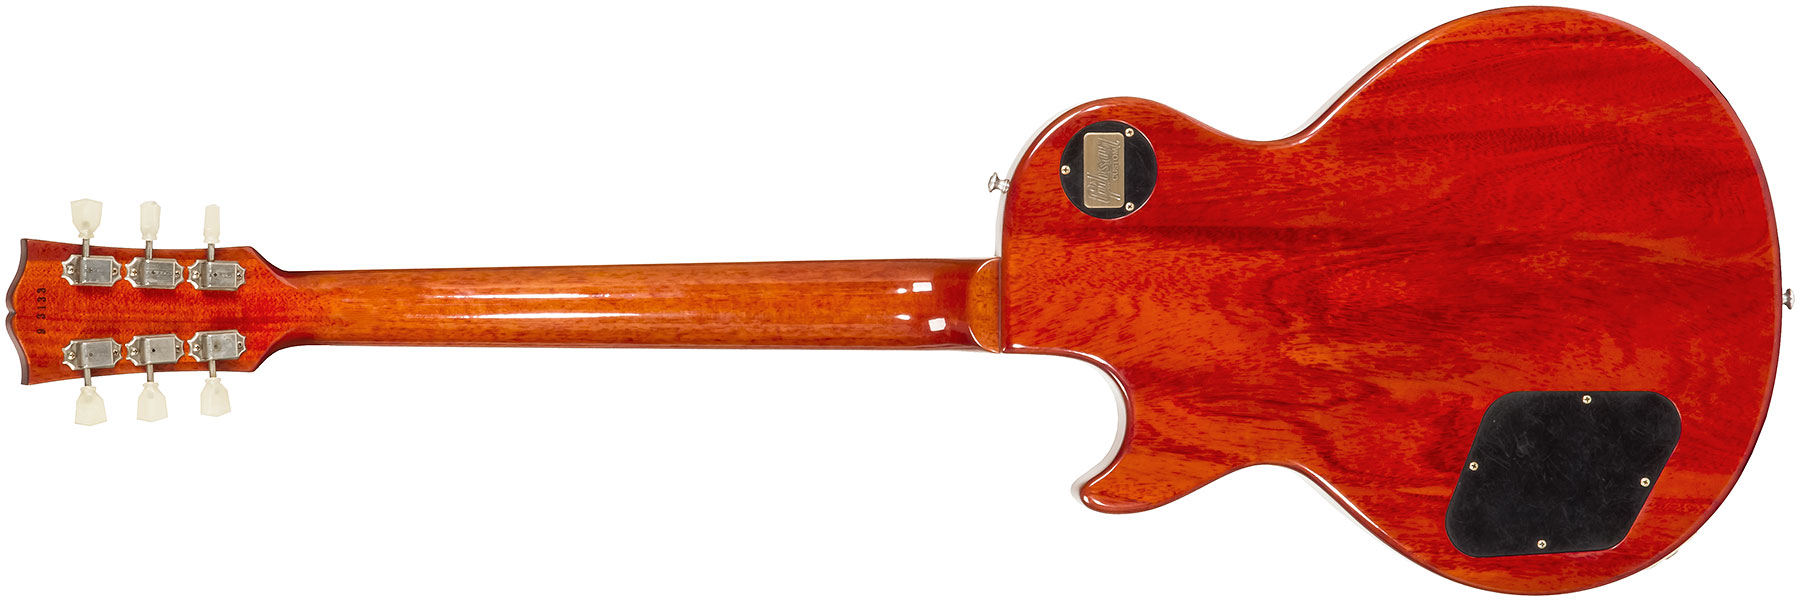 Gibson Custom Shop M2m Les Paul Standard 1959 2h Ht Rw #93133 - Vos Amber Burst - Enkel gesneden elektrische gitaar - Variation 1